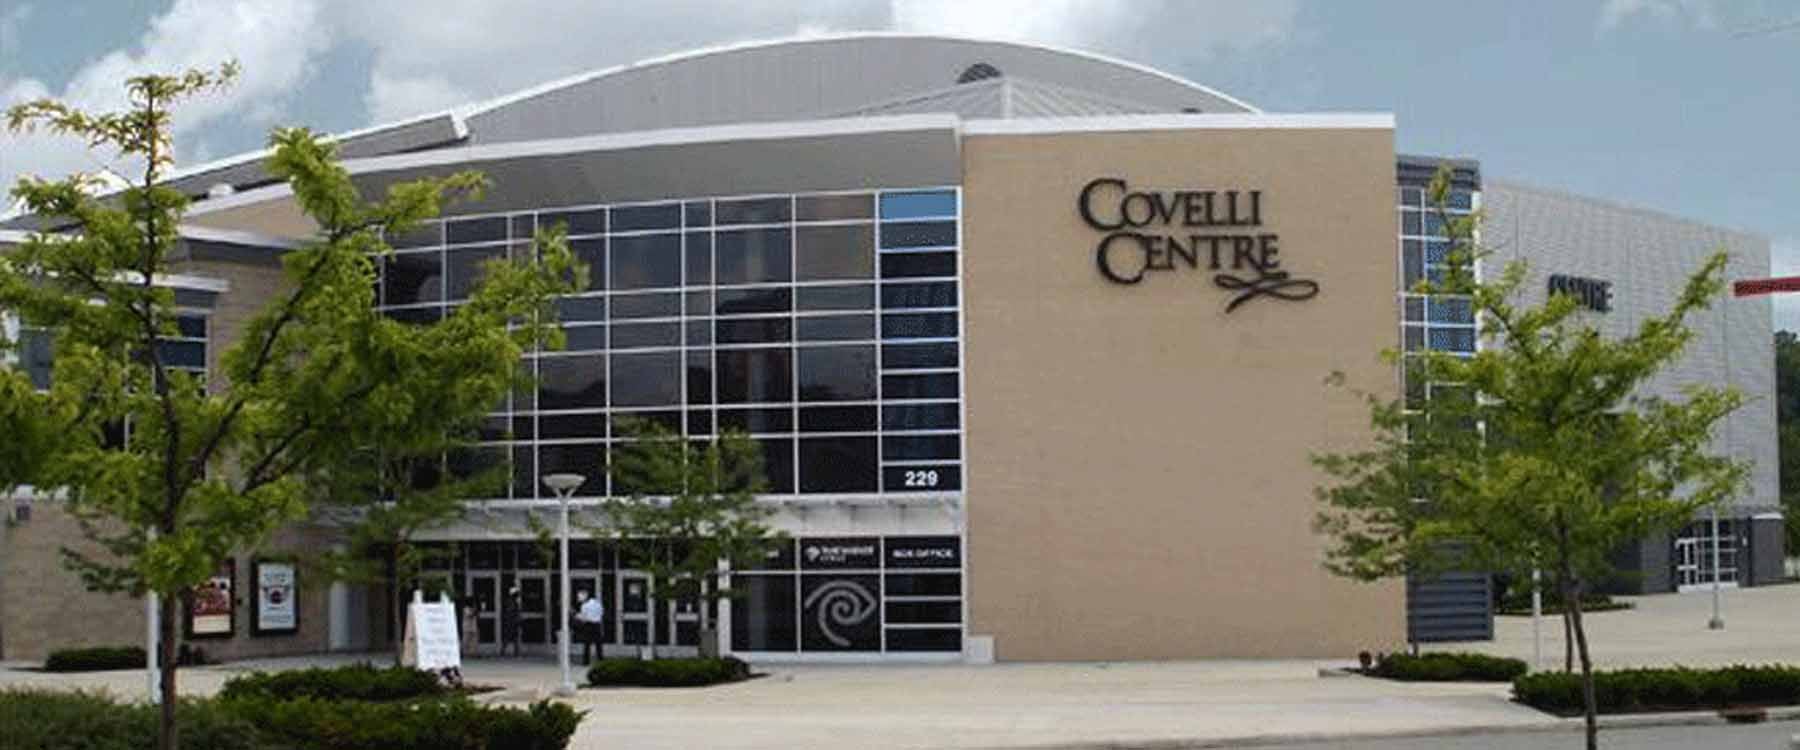 Covelli Centre SLP Concerts Presents